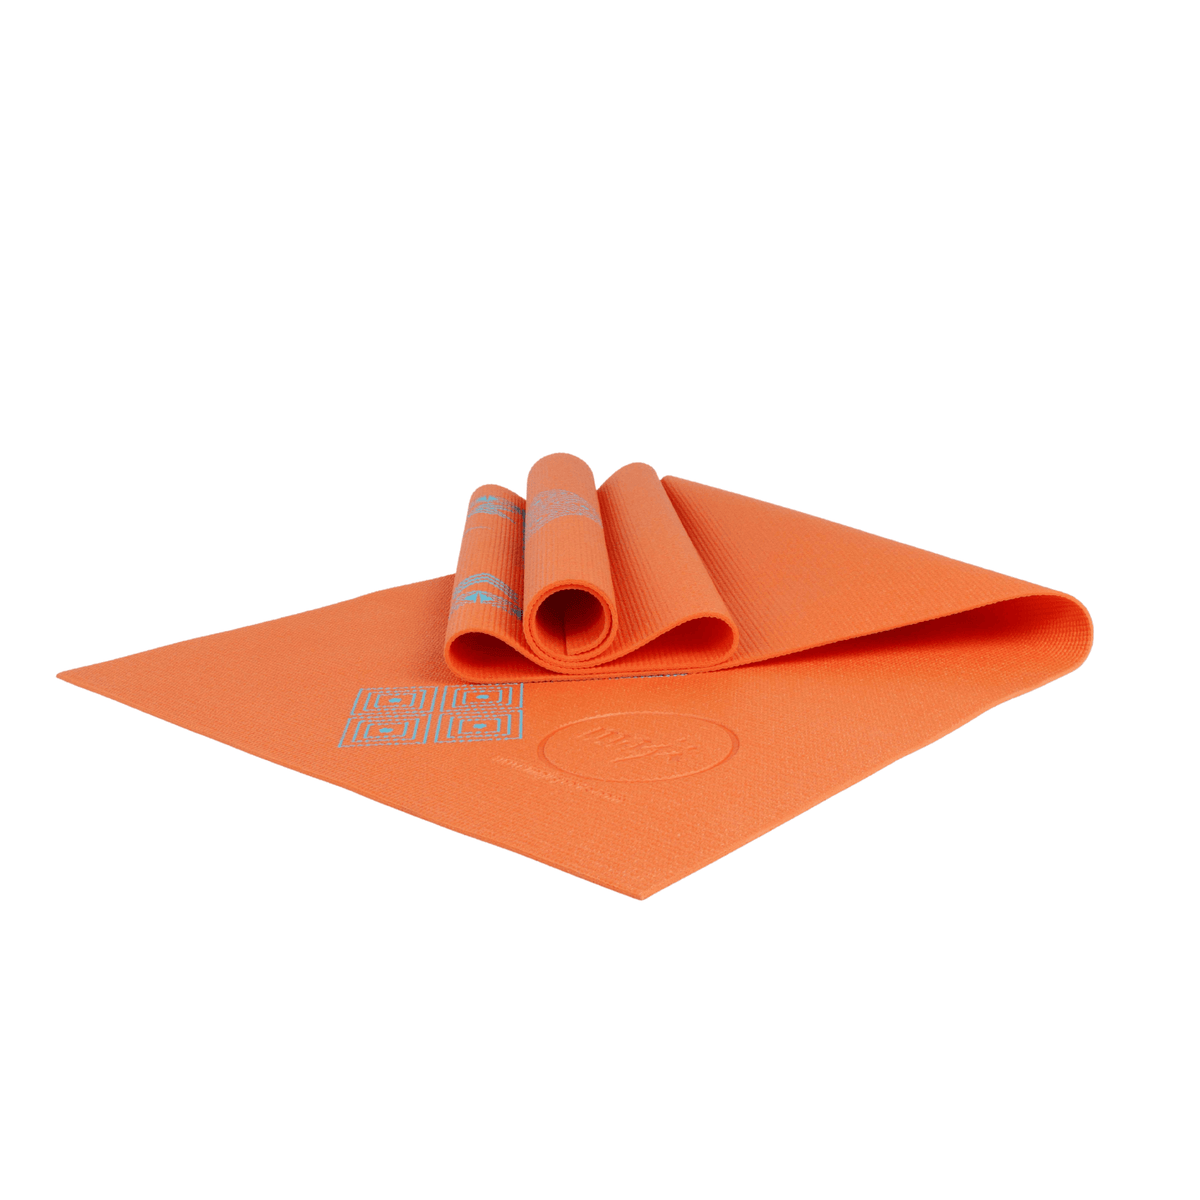 Printed PVC Yoga Mat by Jupiter Gear